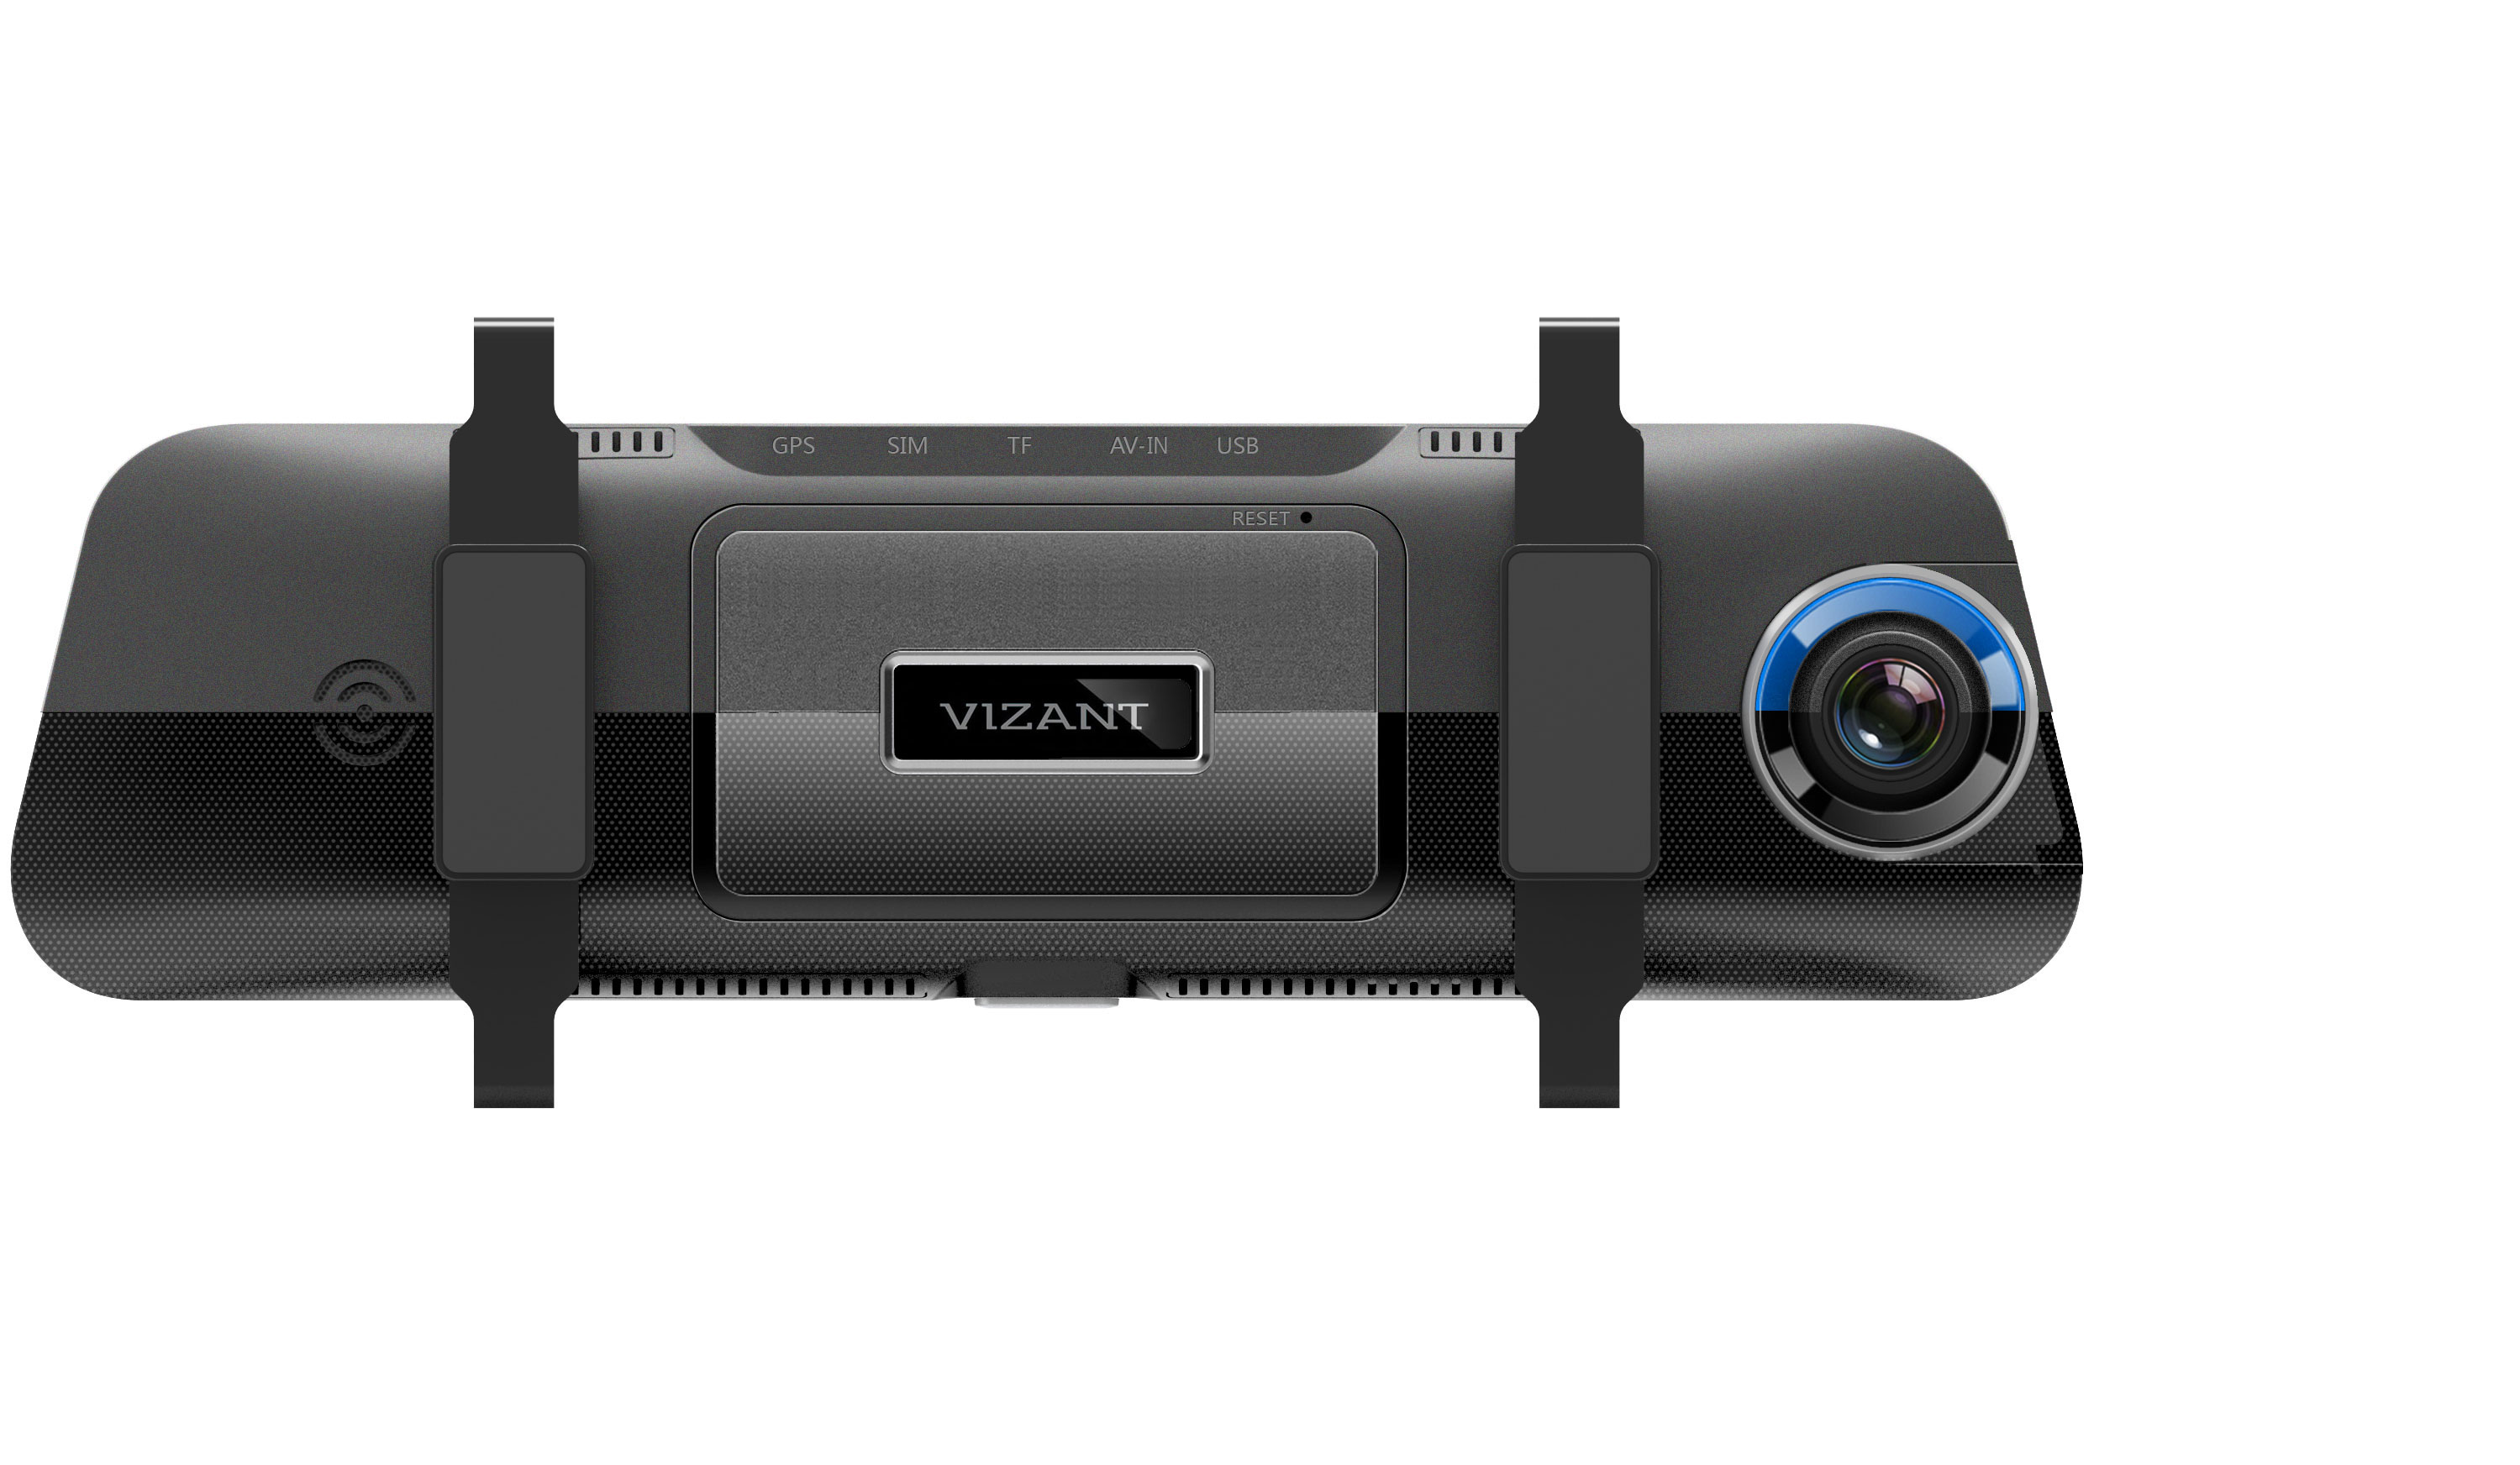 Видеорегистратор Vizant-250 Assist Full HD 1080P c 2-мя камерами и датчиками парковки